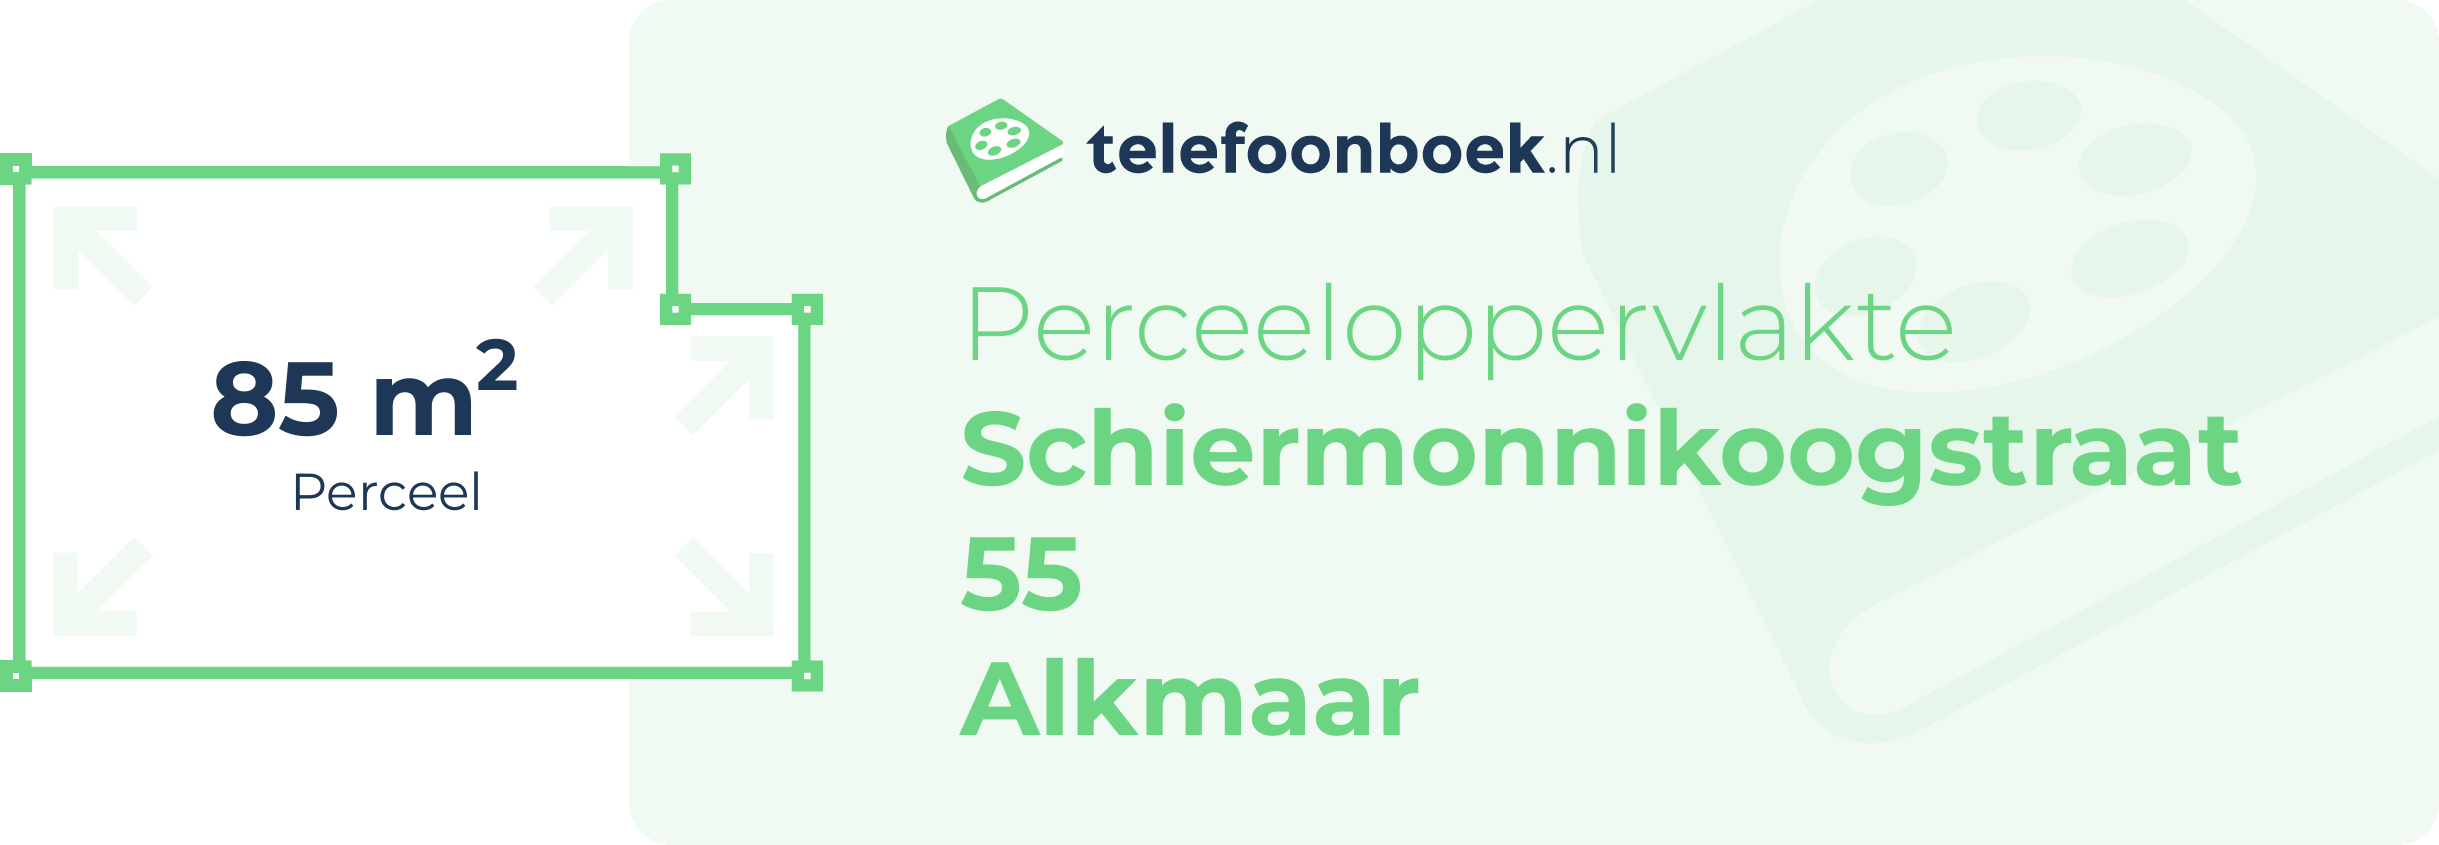 Perceeloppervlakte Schiermonnikoogstraat 55 Alkmaar